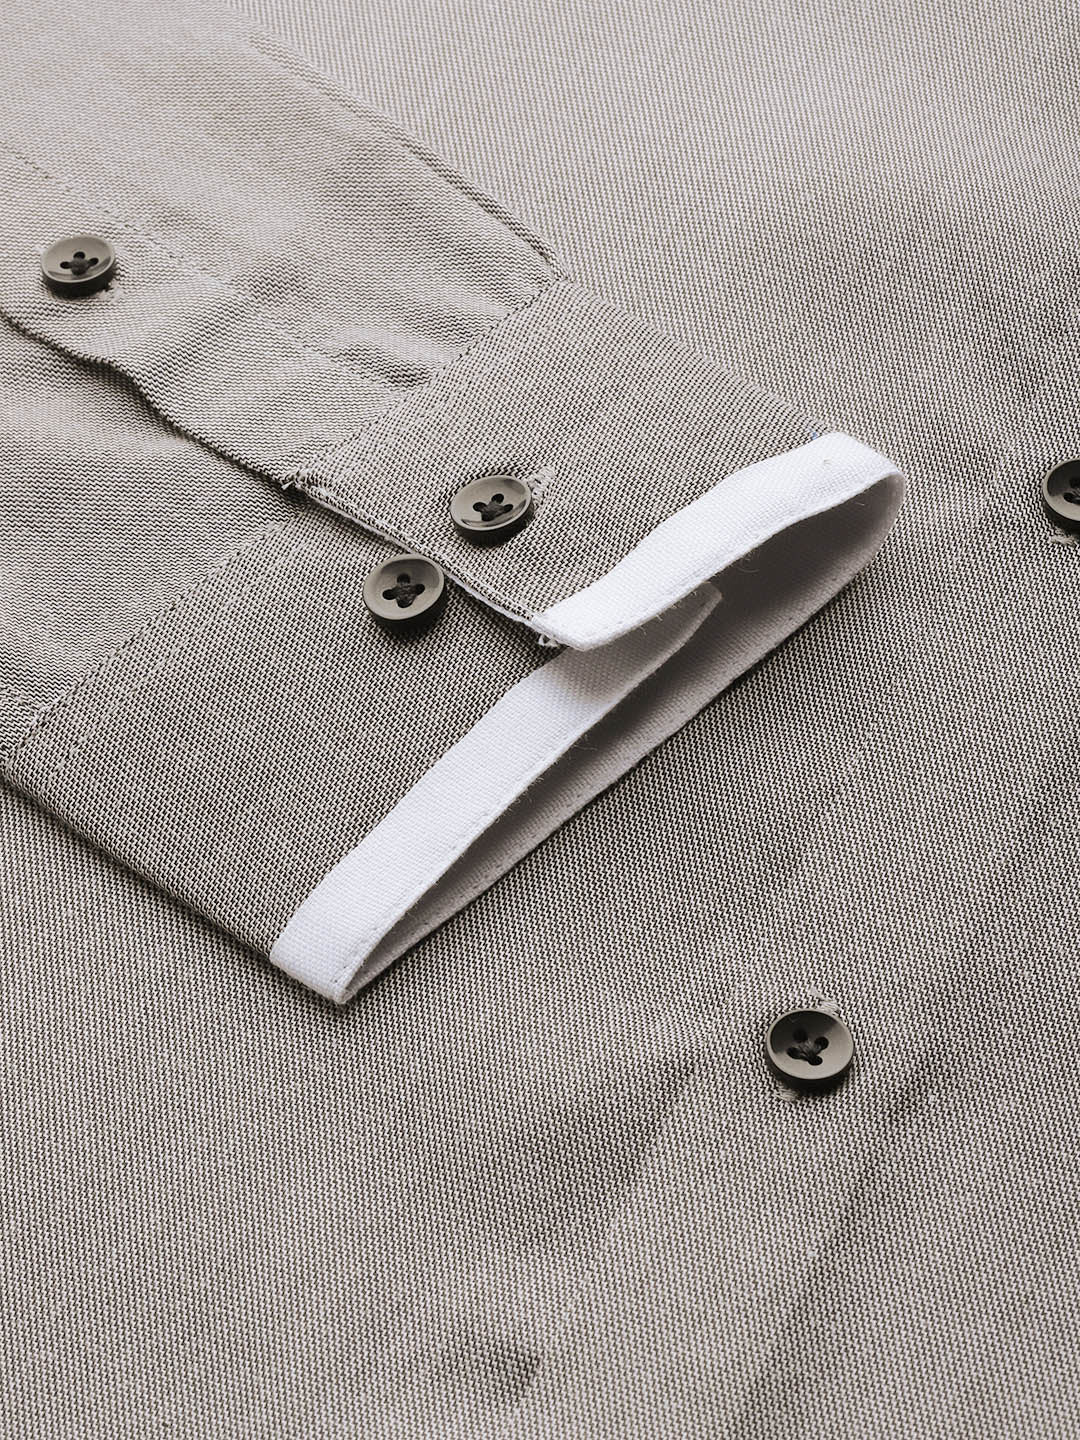 Men's  Cotton Solid Formal Shirts ( SF 796Charcoal ) - Jainish